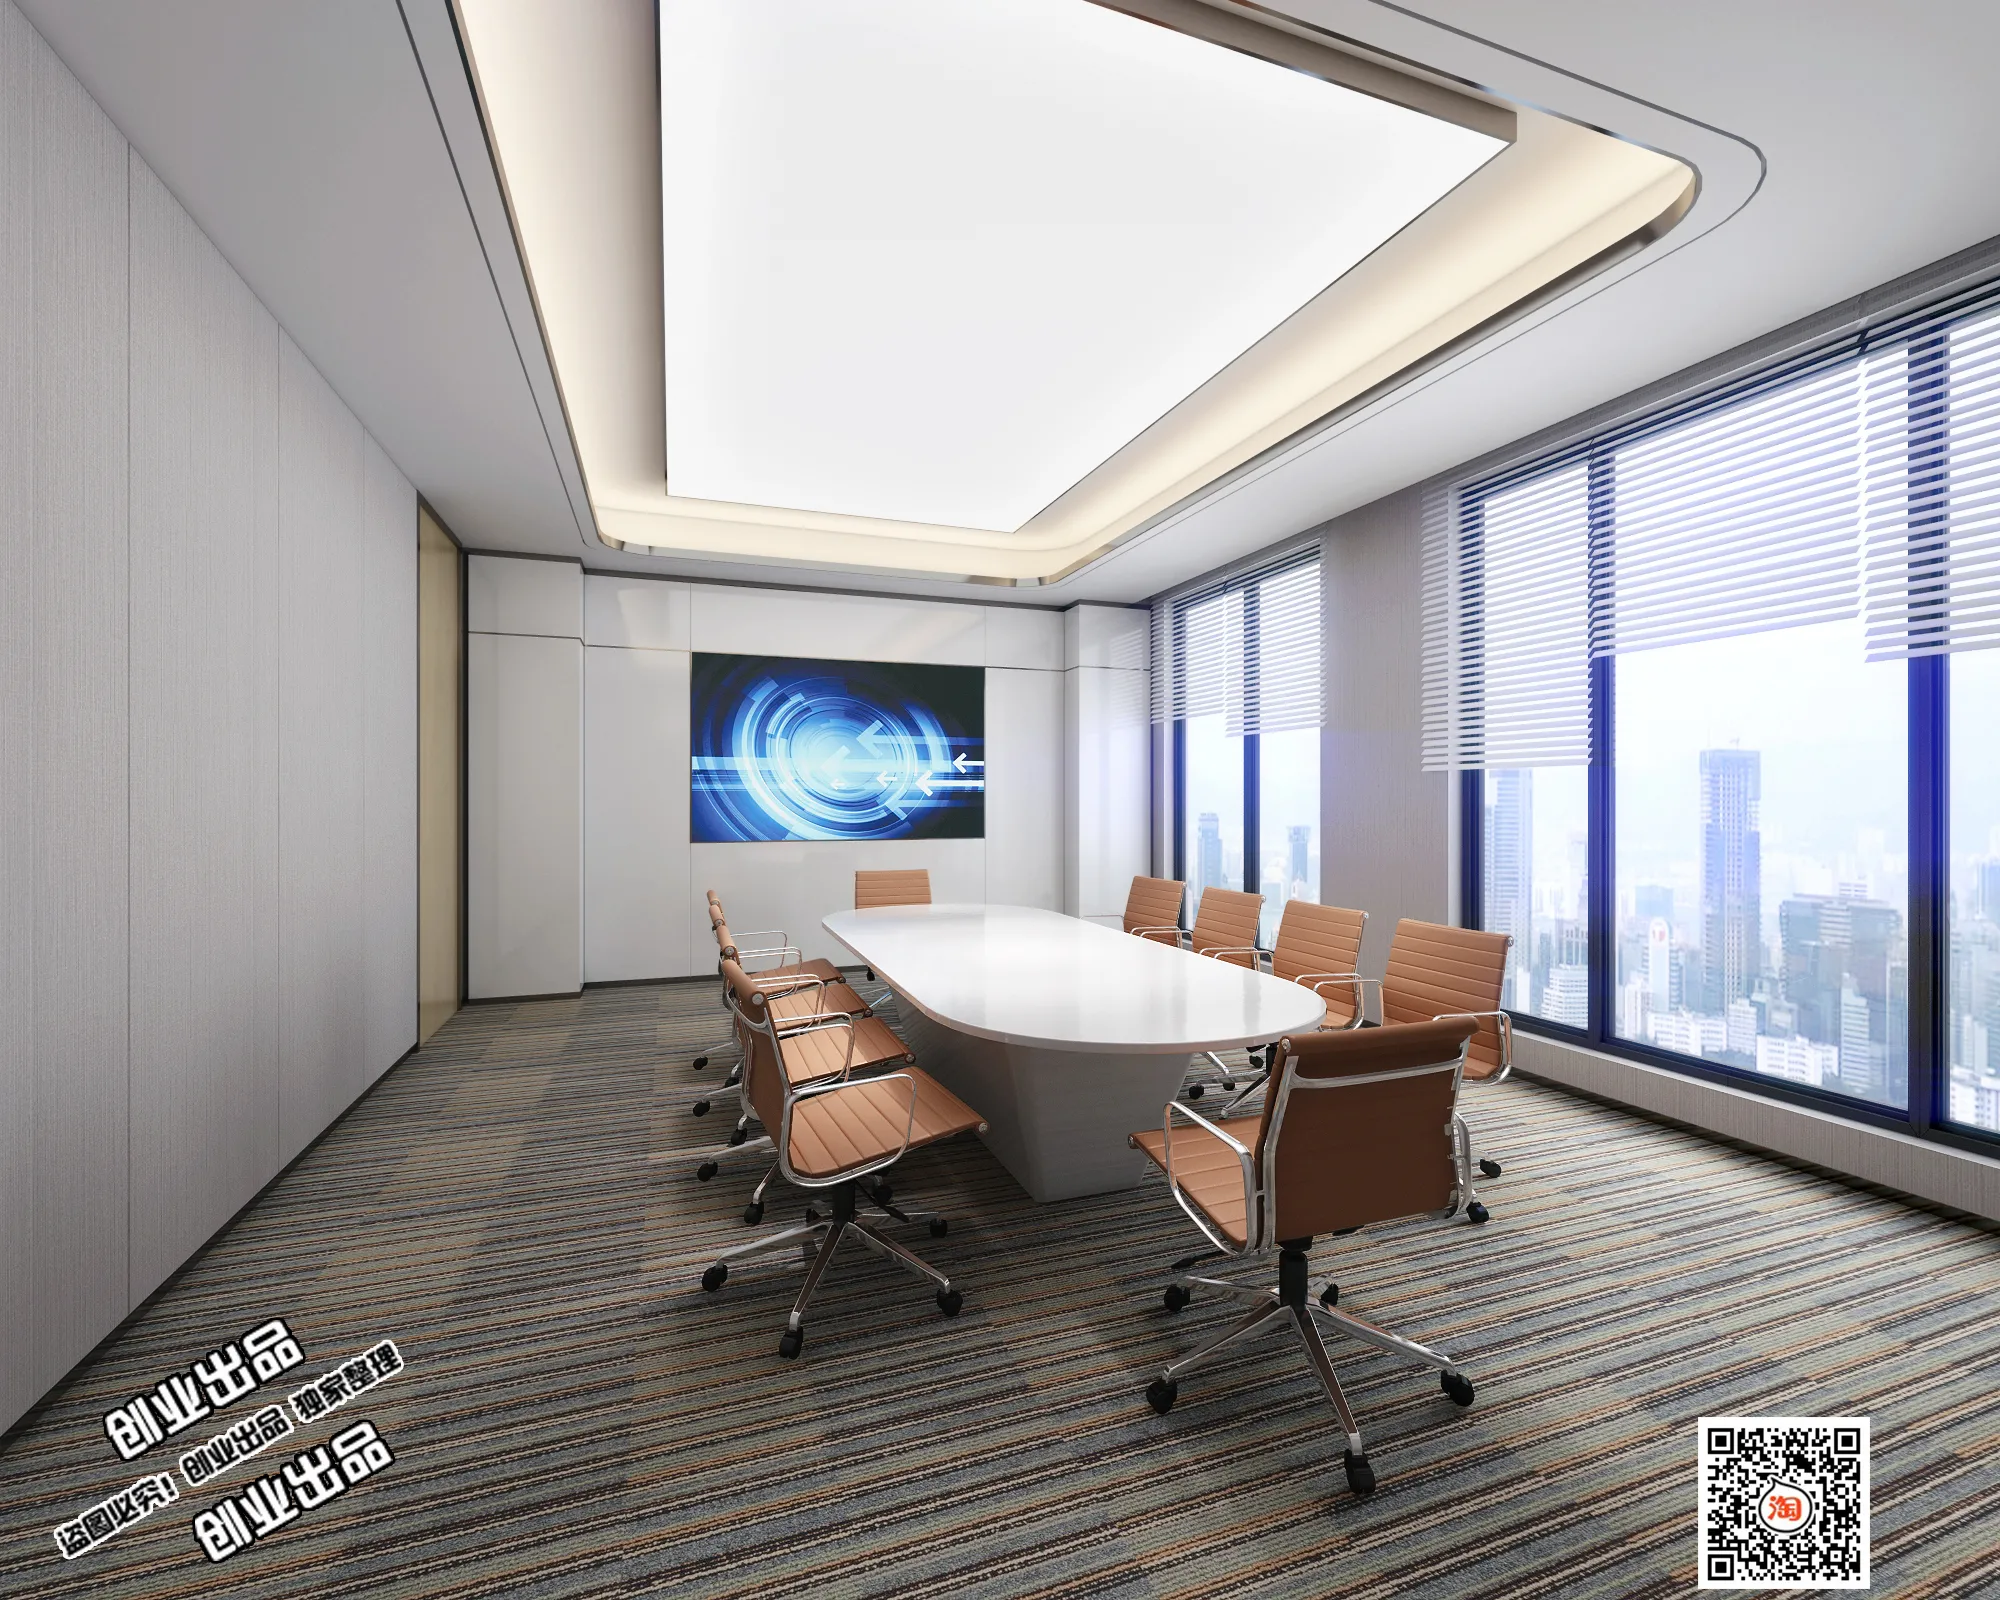 3D OFFICE INTERIOR (VRAY) – MEETING ROOM 3D SCENES – 018